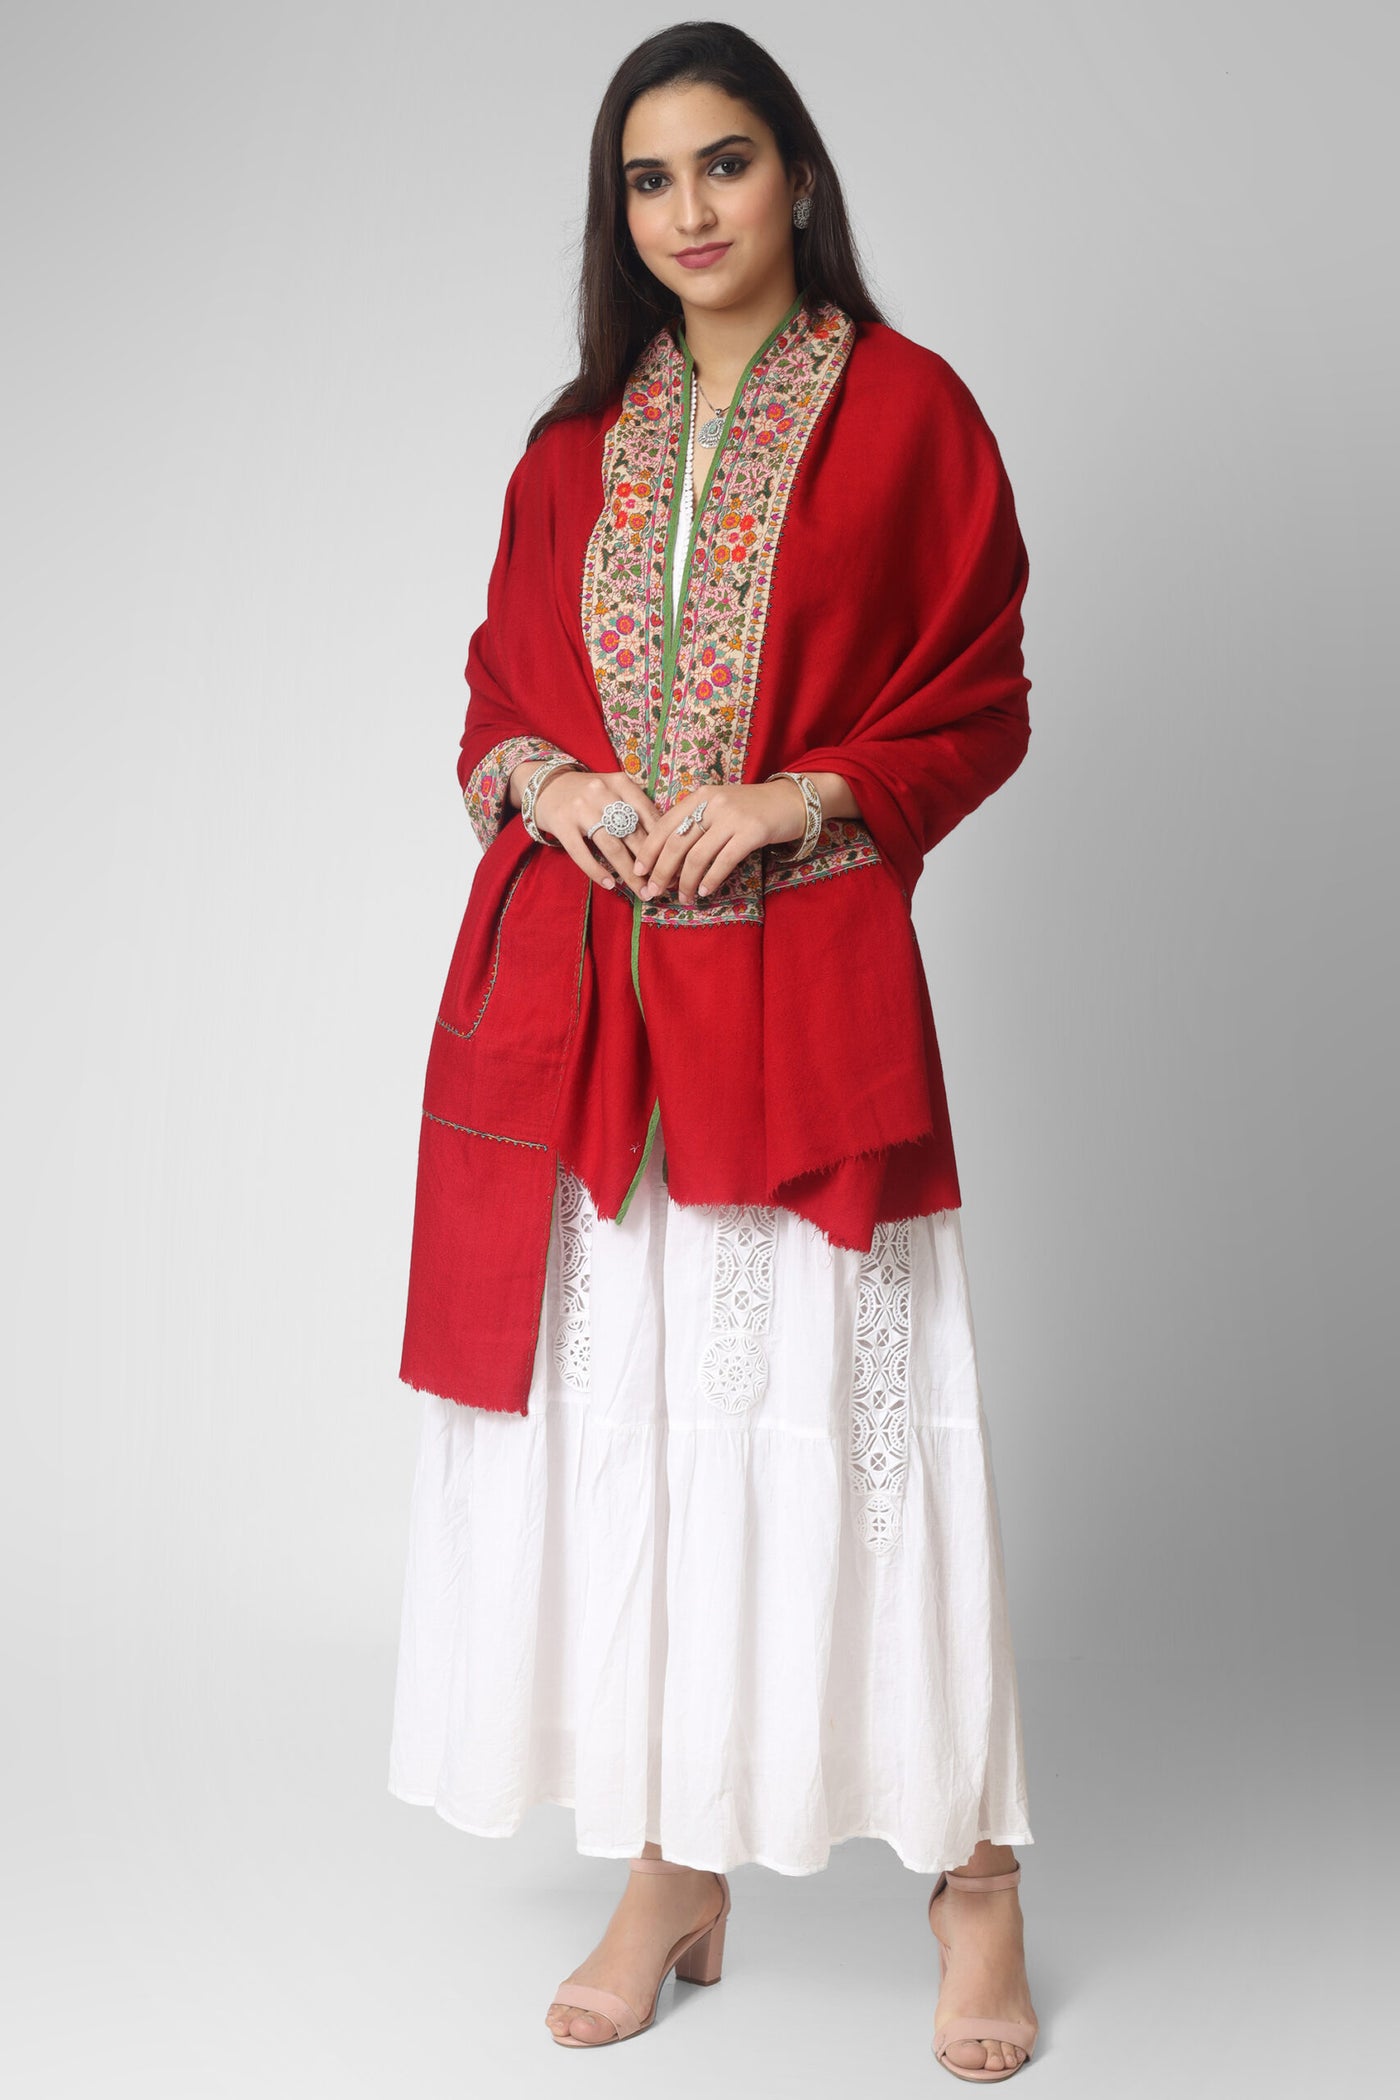 Red Pashmina patchwork dourdaar sozni shawl